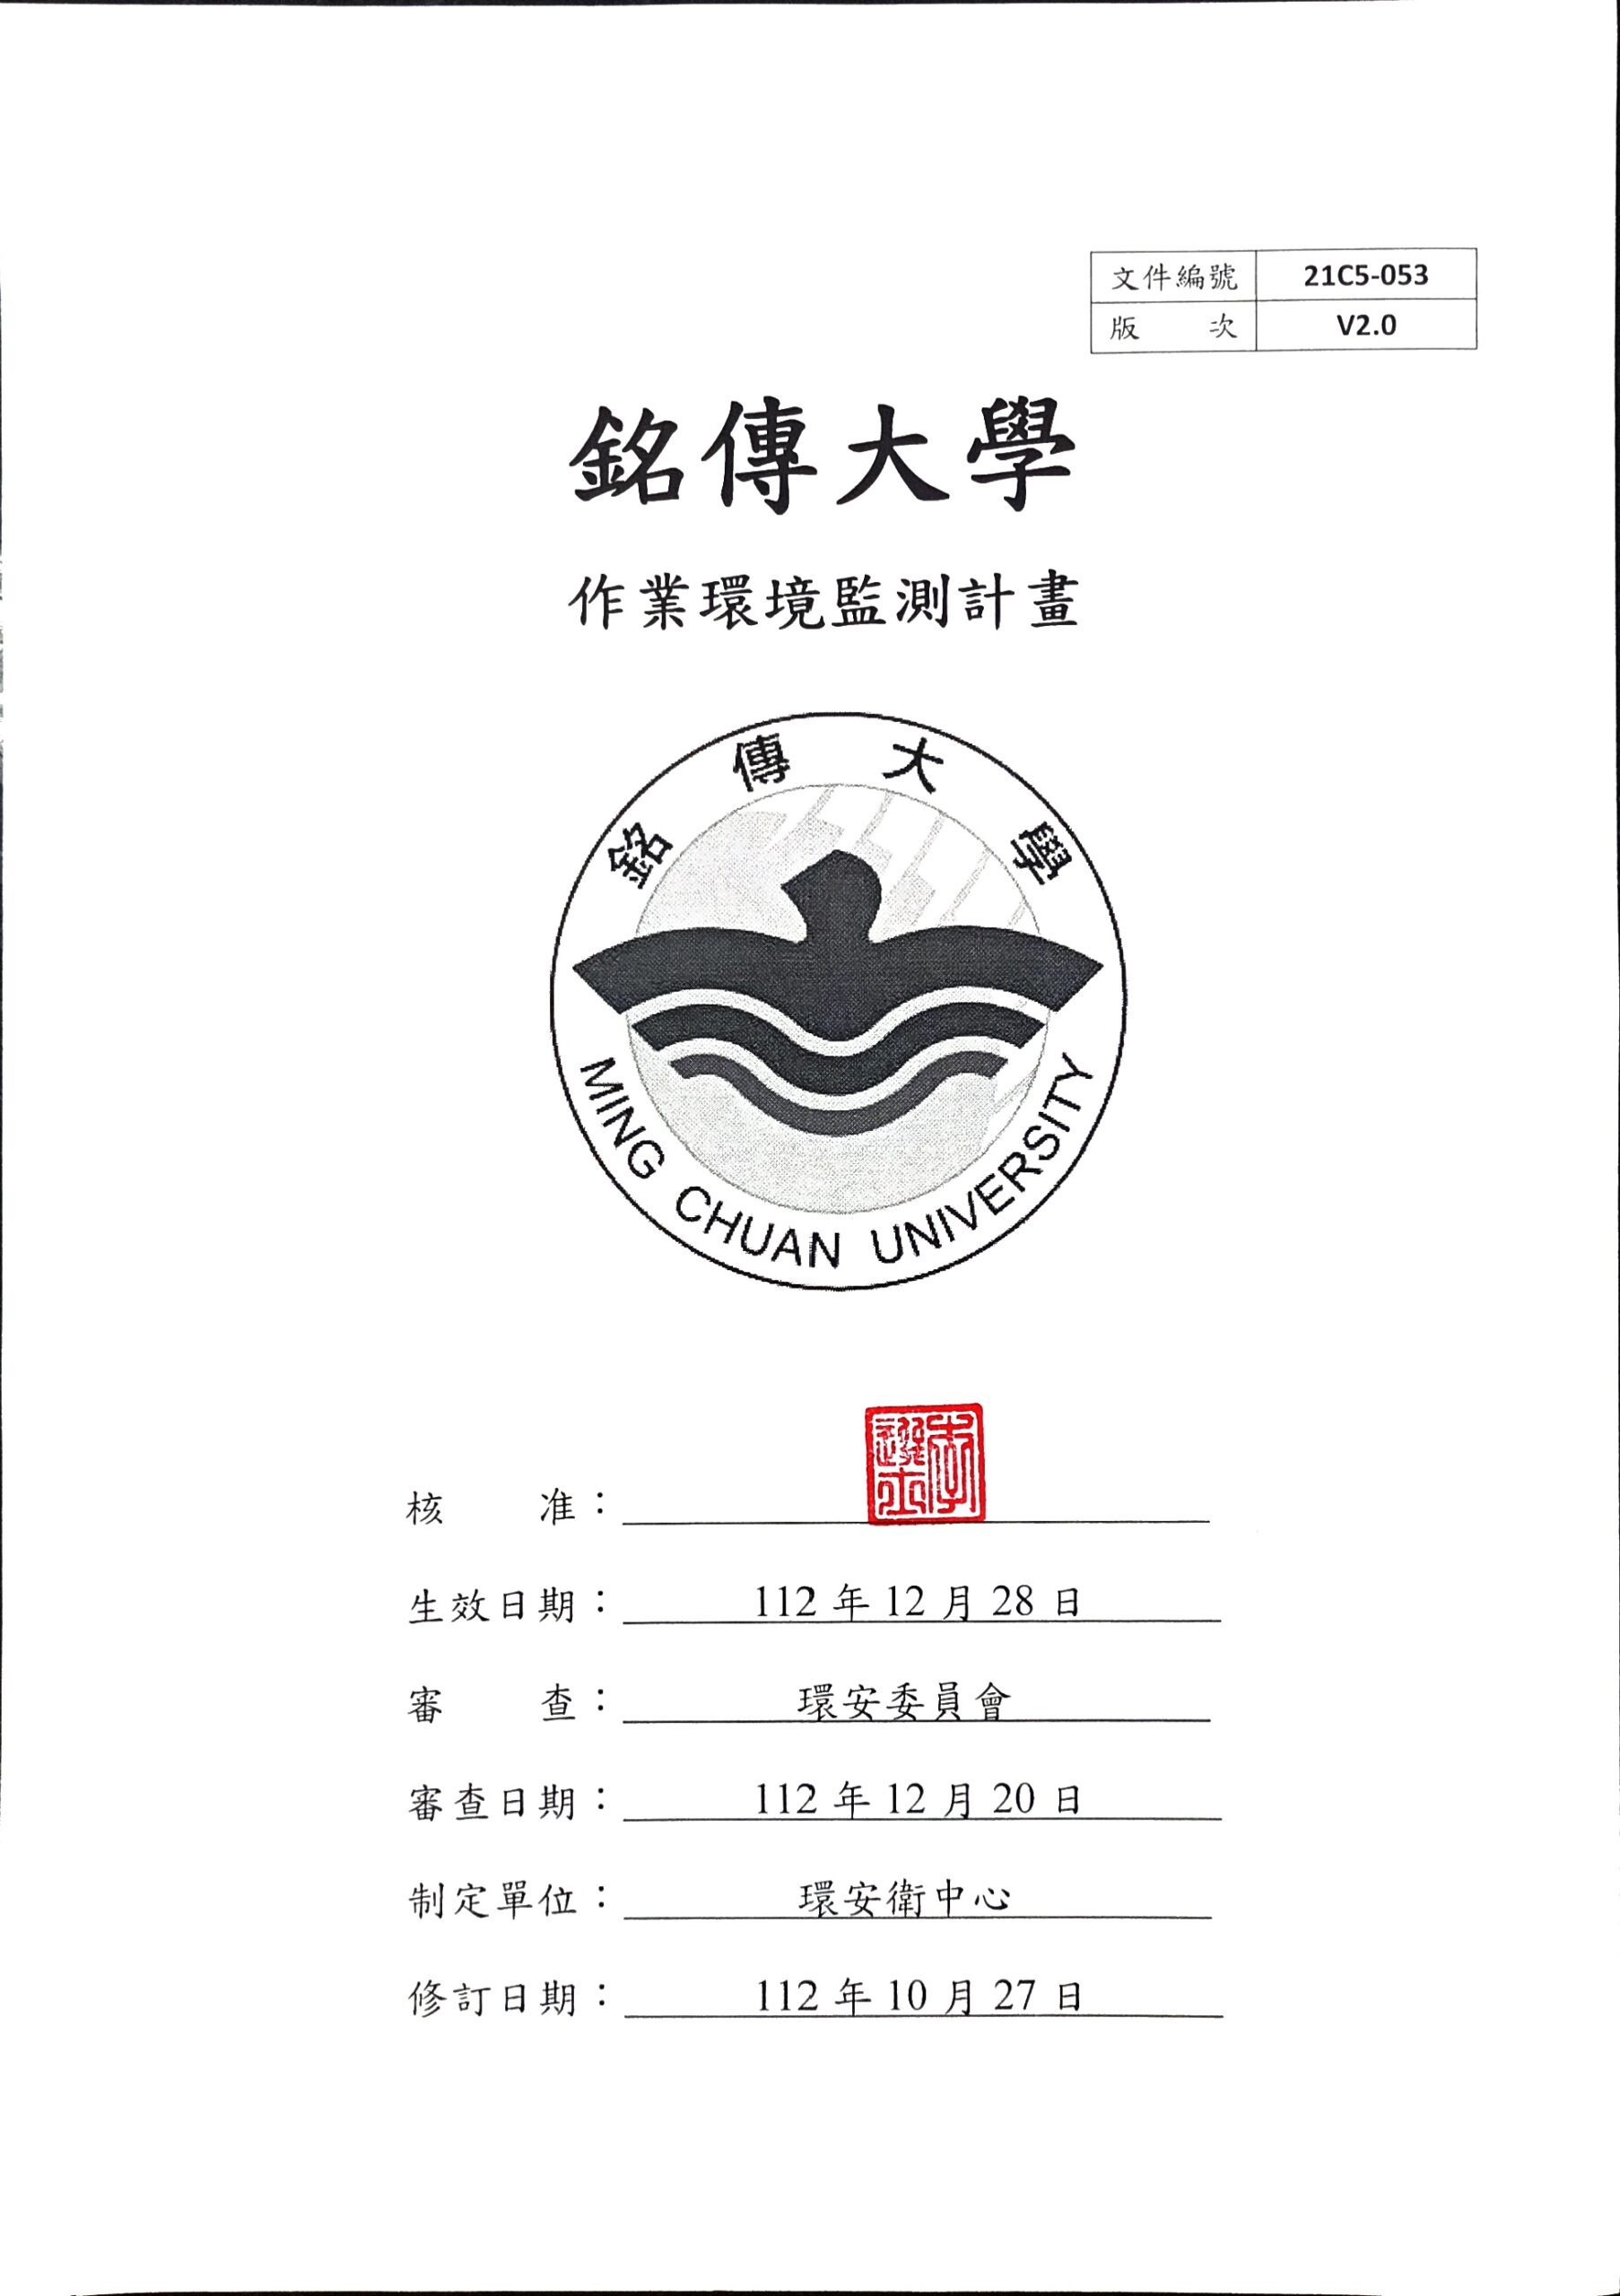 Featured image for “銘傳大學 作業環境監測計畫已於112年12月28日校長核定公佈實施”